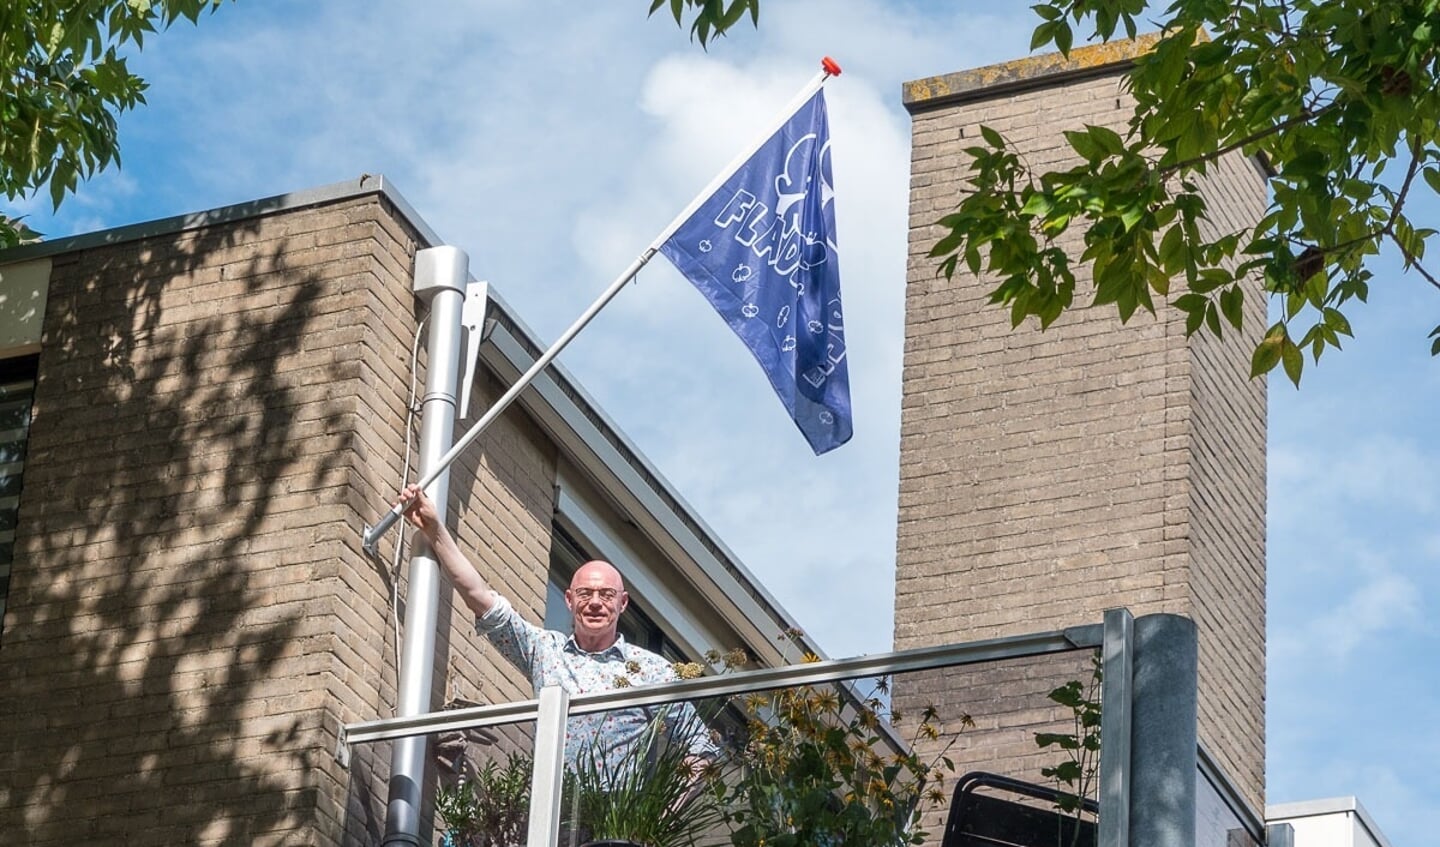 En de Fladdervlag wappert bij de burgemeester thuis